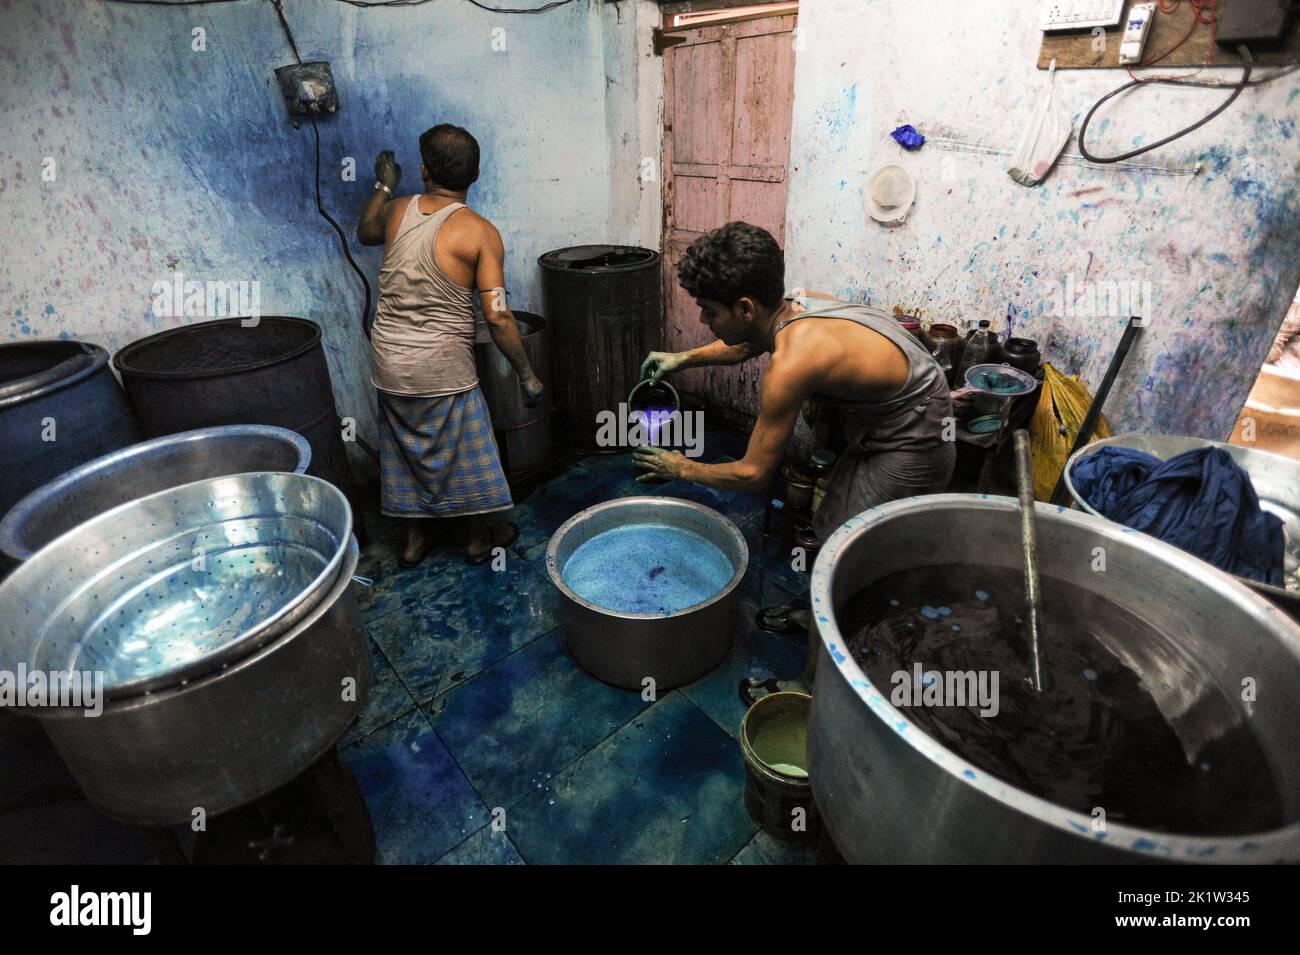 07.12.2011, Mumbai, Maharashtra, India, Asia - Workers dye fabrics in a metal vat at a workshop in the Dharavi slum area of Mumbai. Stock Photo